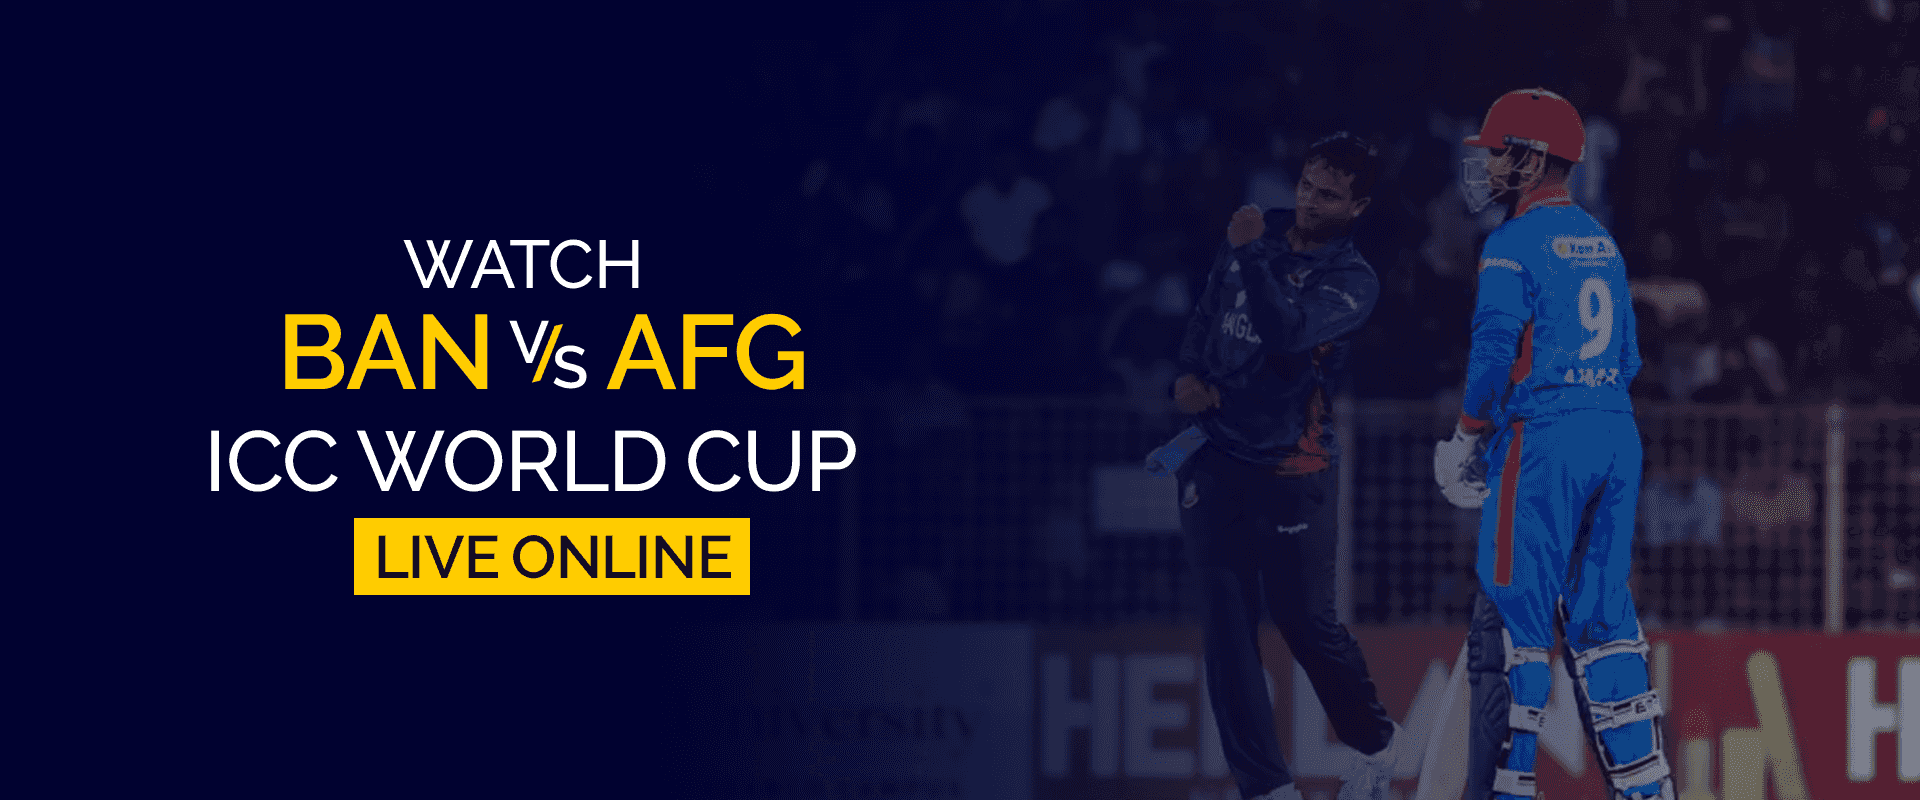 Смотрите онлайн-трансляцию чемпионата мира BAN против AFG ICC